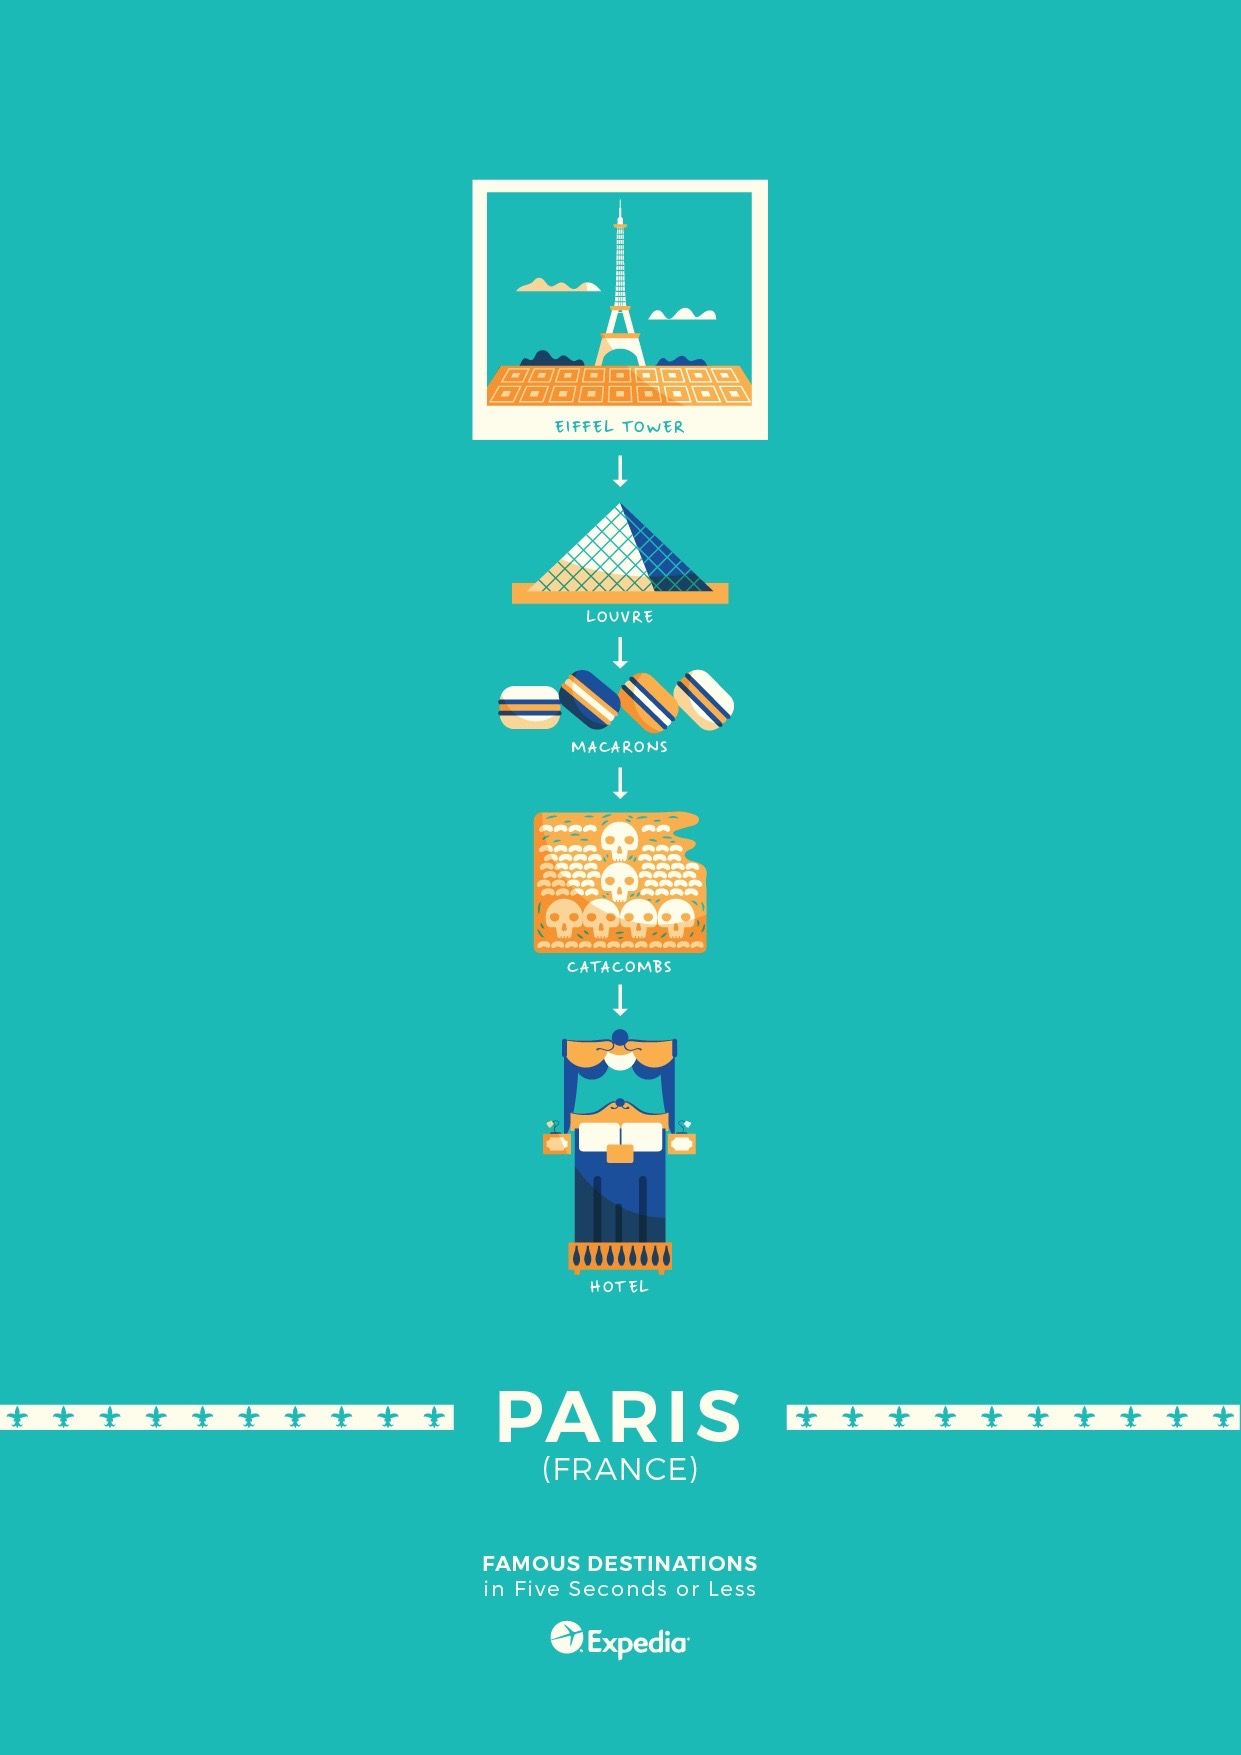 08_Paris-1 top destinations